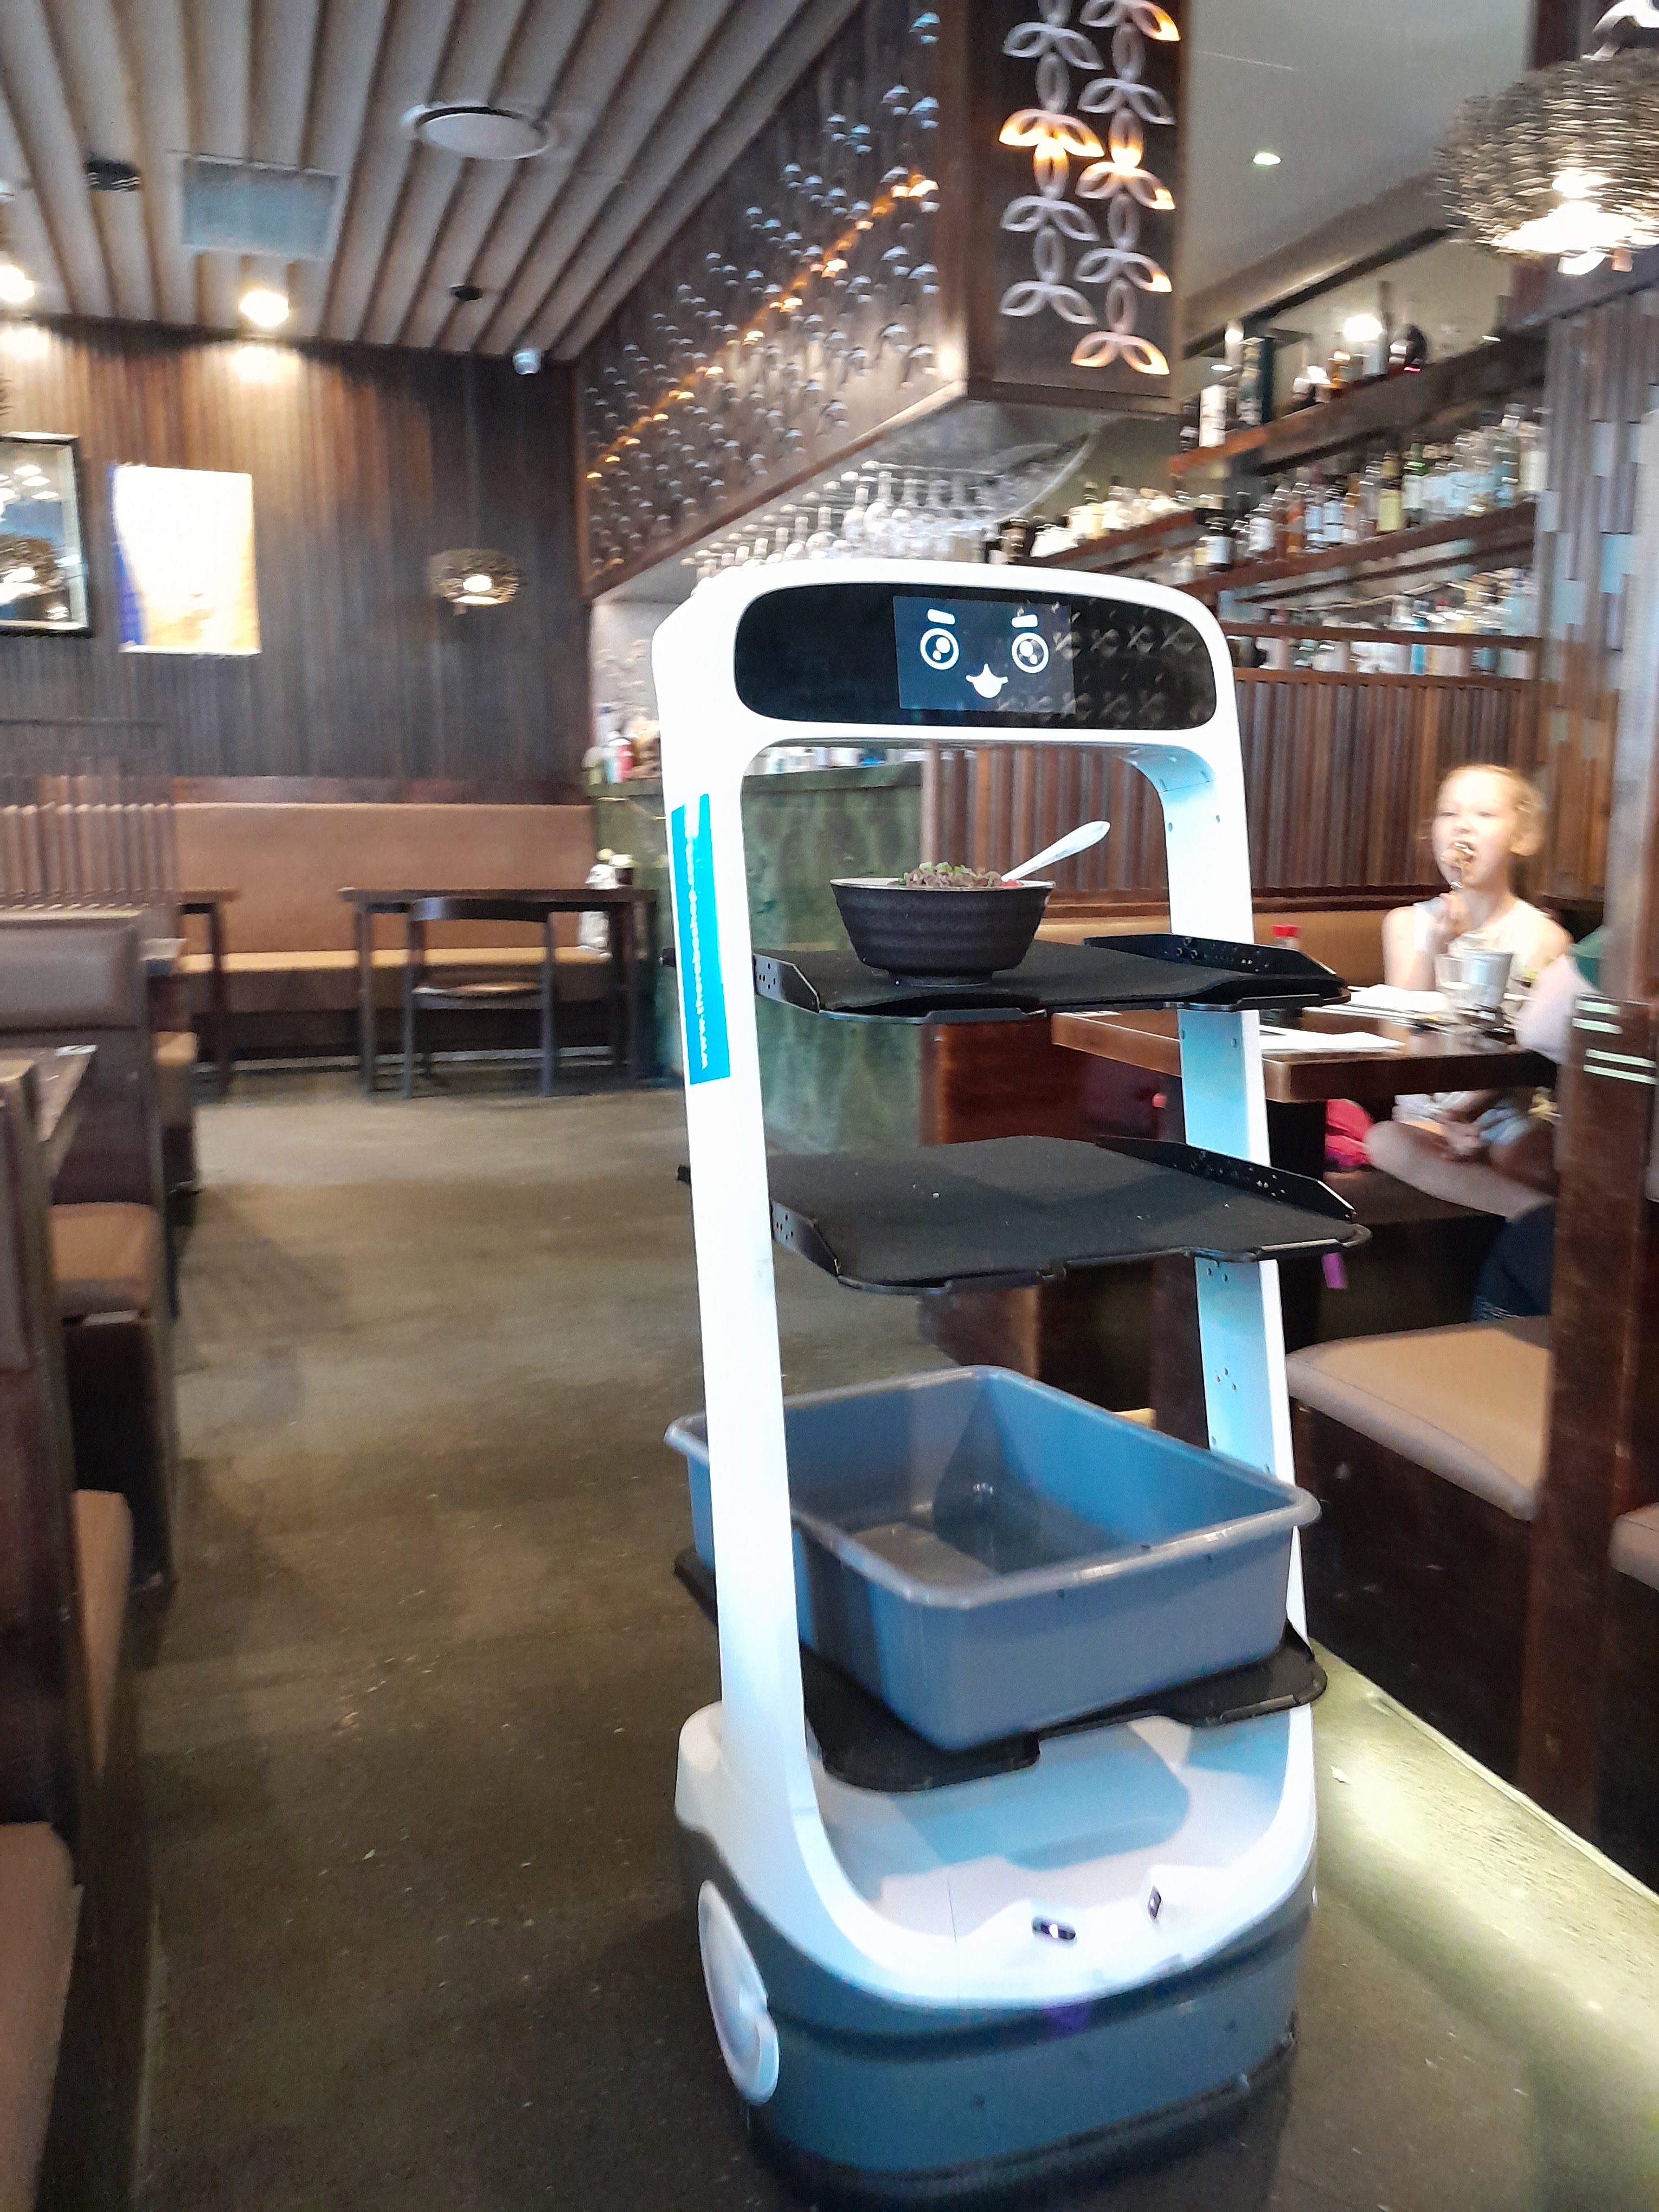 Surviving and enjoying retirement: Robot Waiter